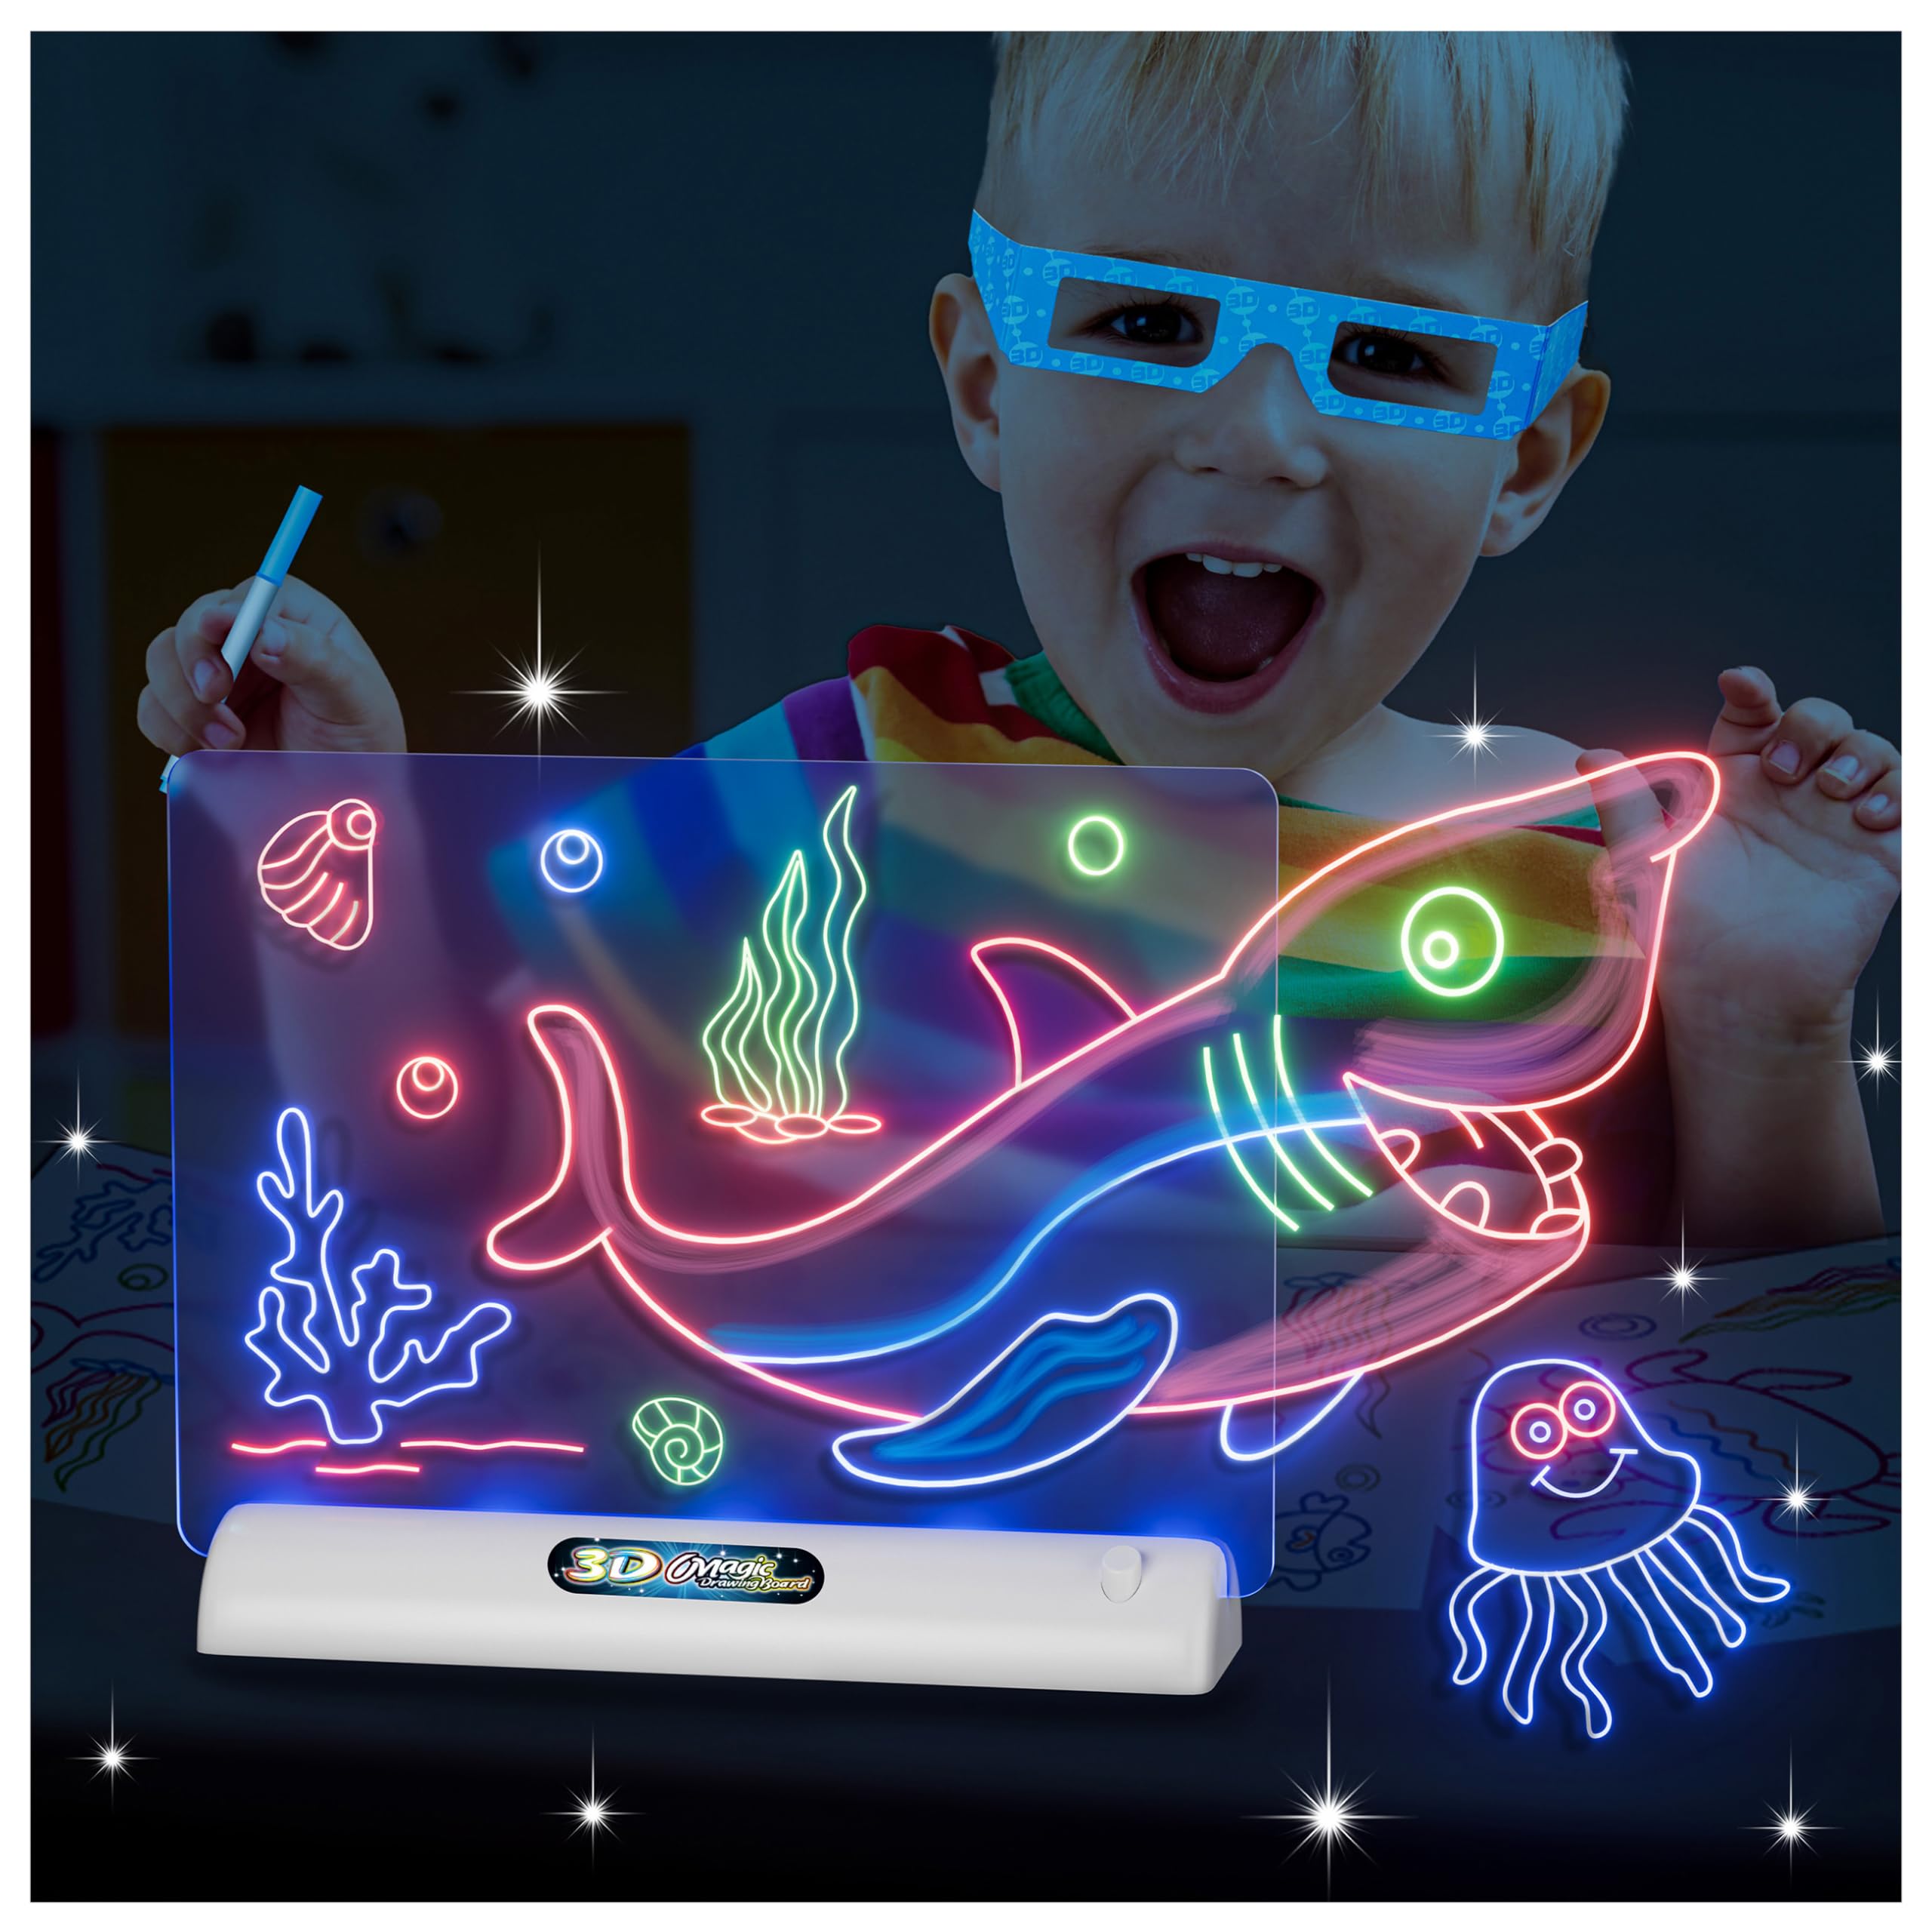  Style Shine Kids Magic 3D Light Board, Colorful 3D